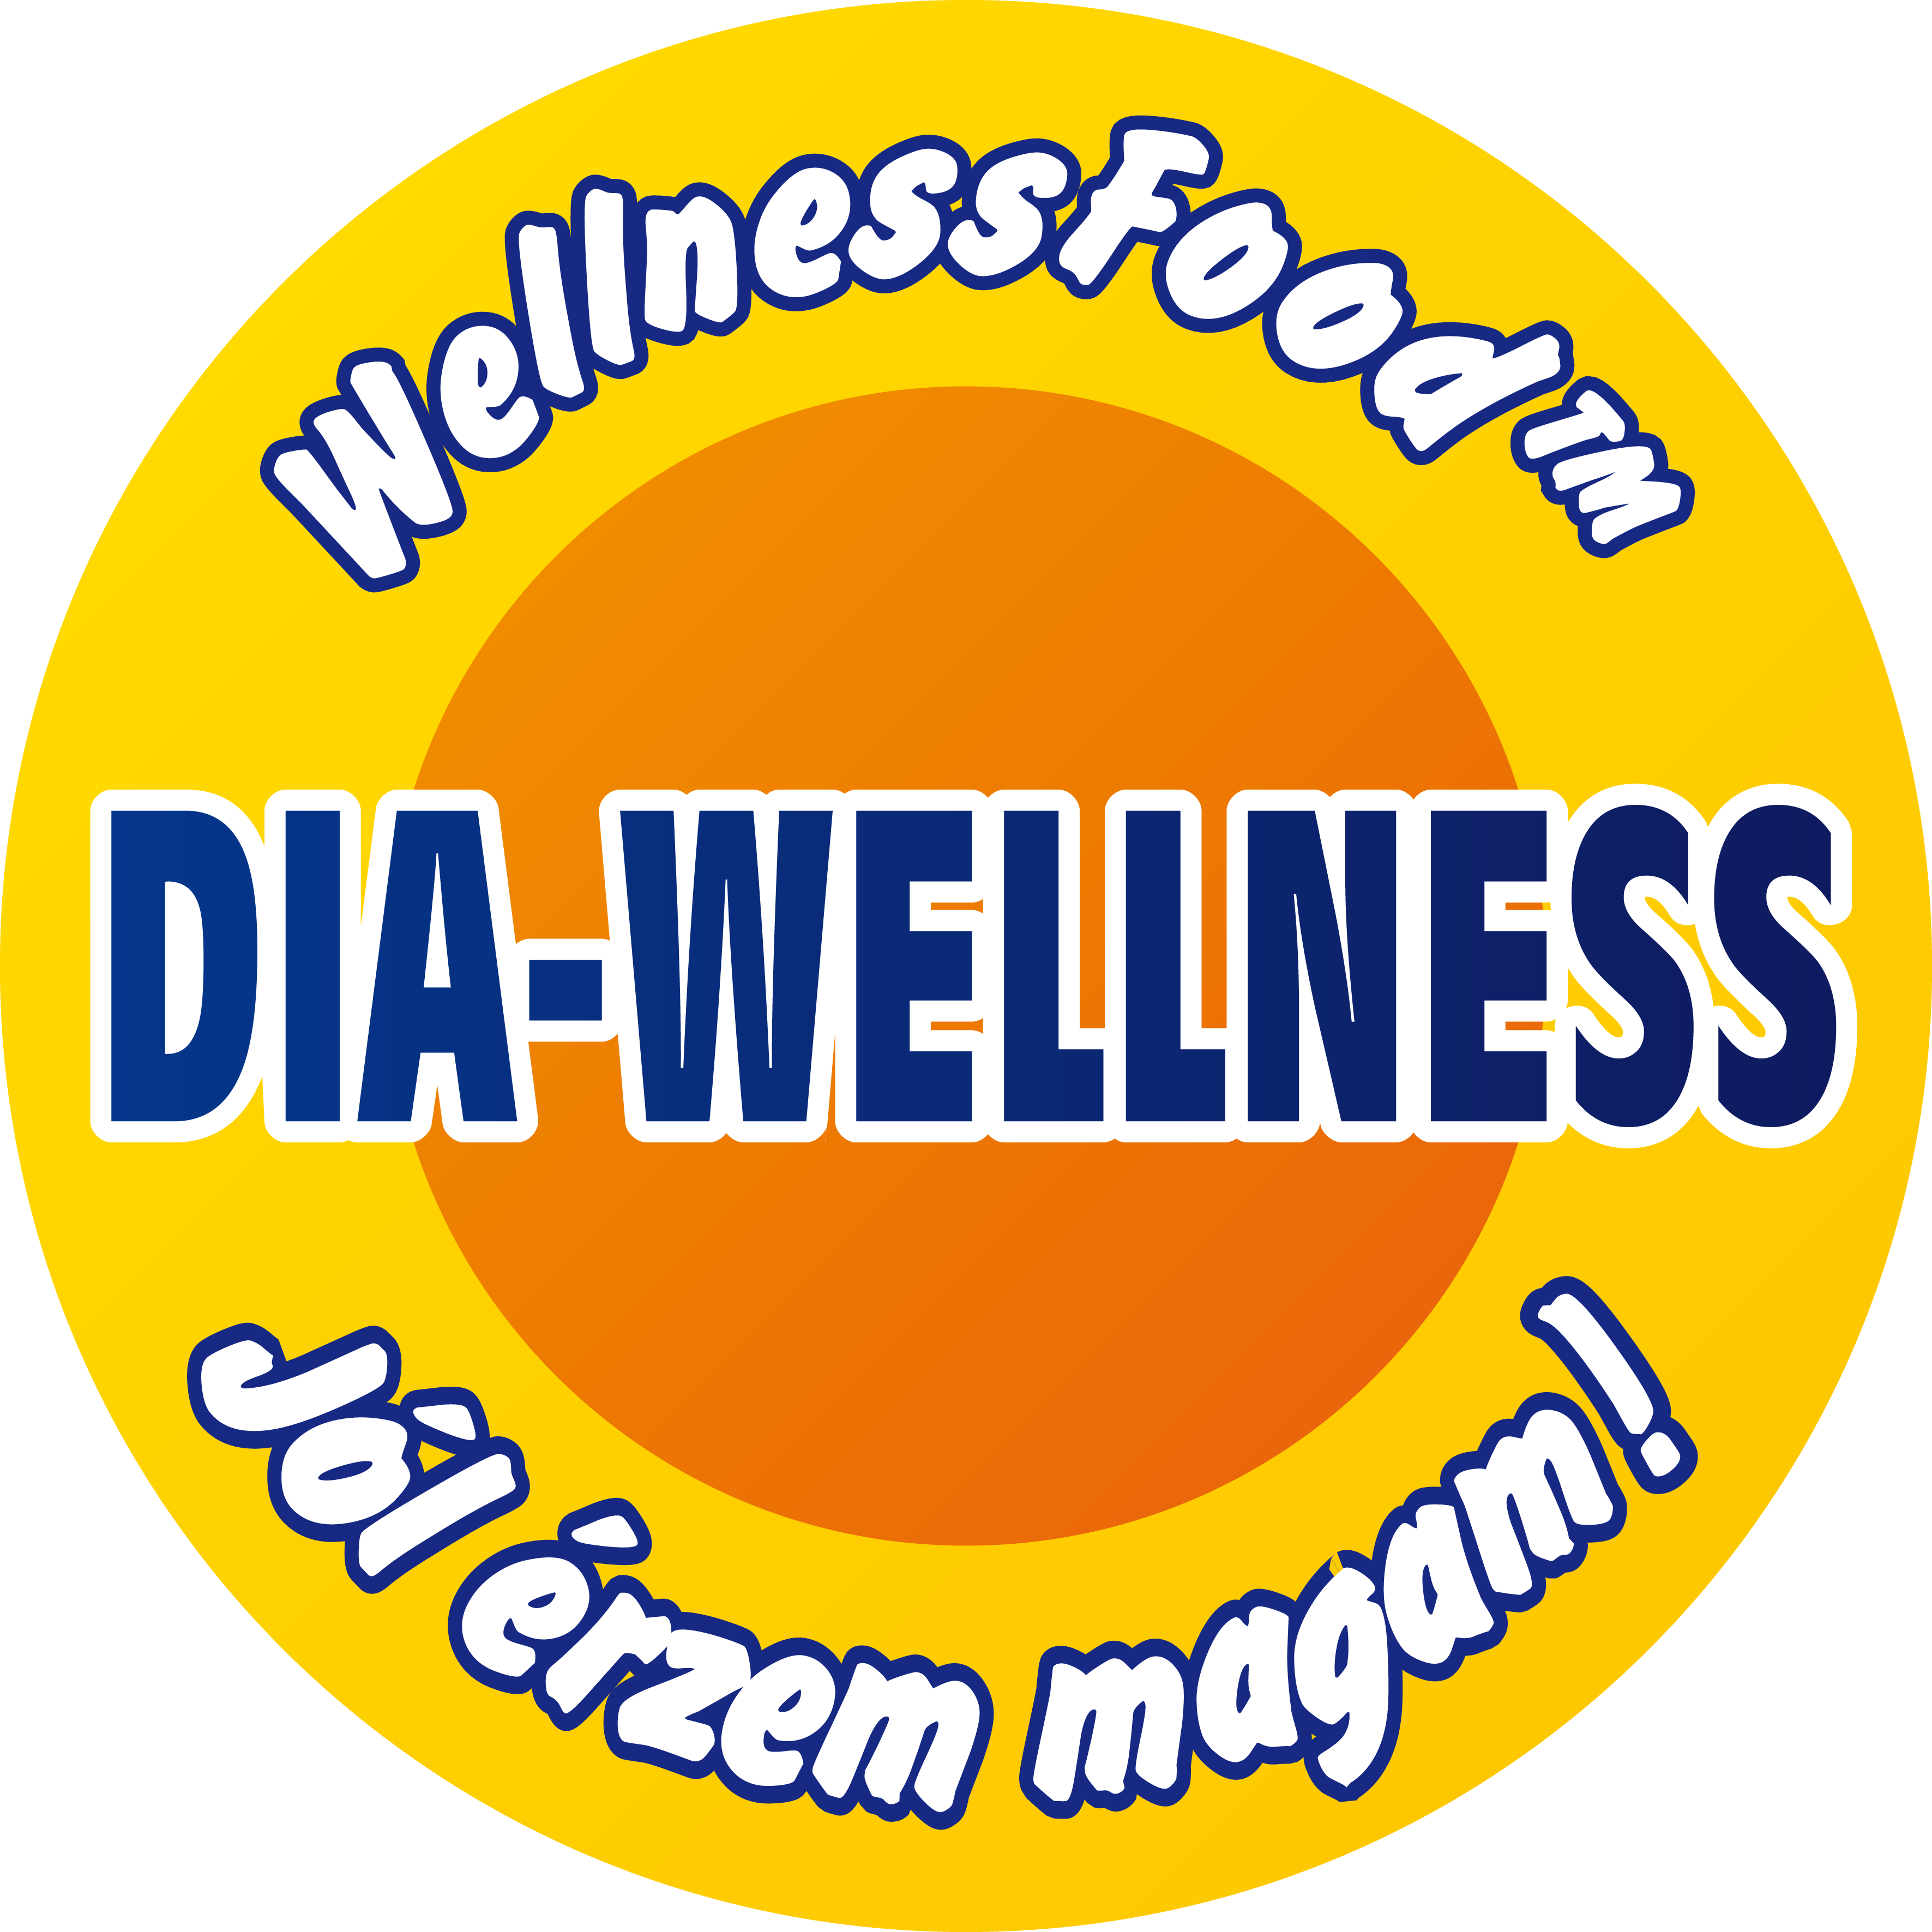 dia wellness logo jolerzemmagam gorbe